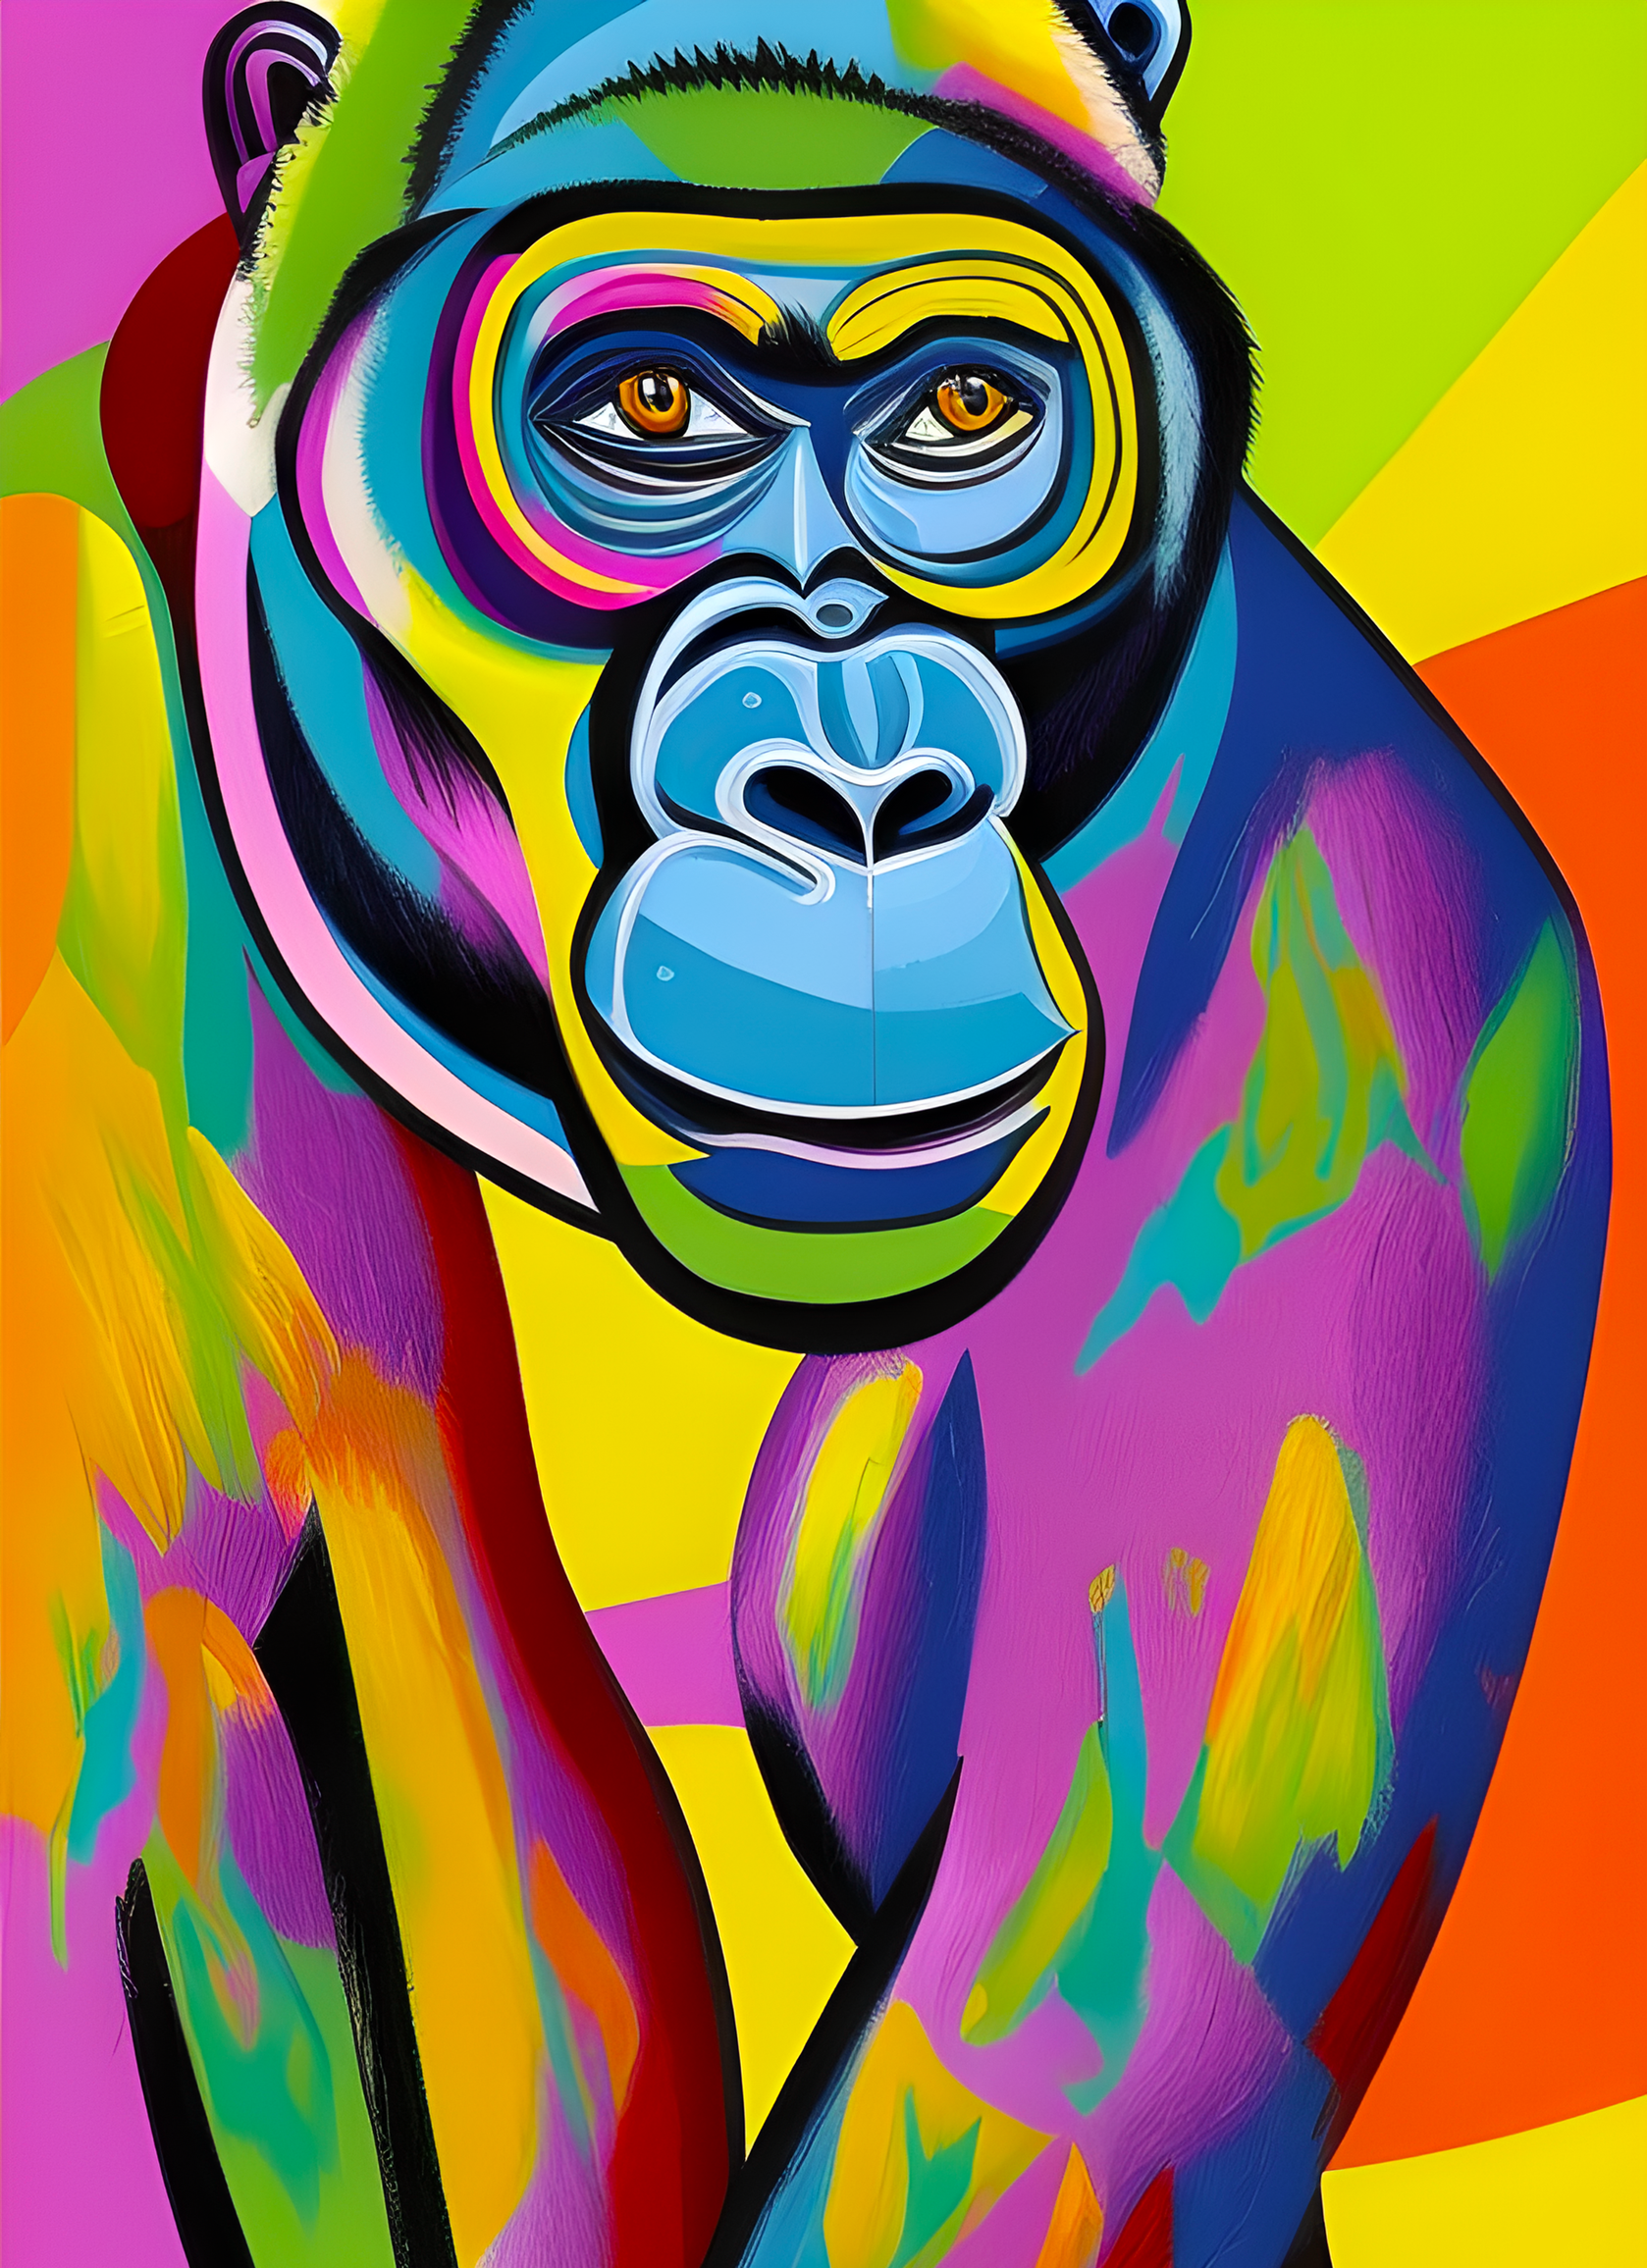 Monkey Chimpanzee Animal Colourful Abstract Art Blank Greeting Card